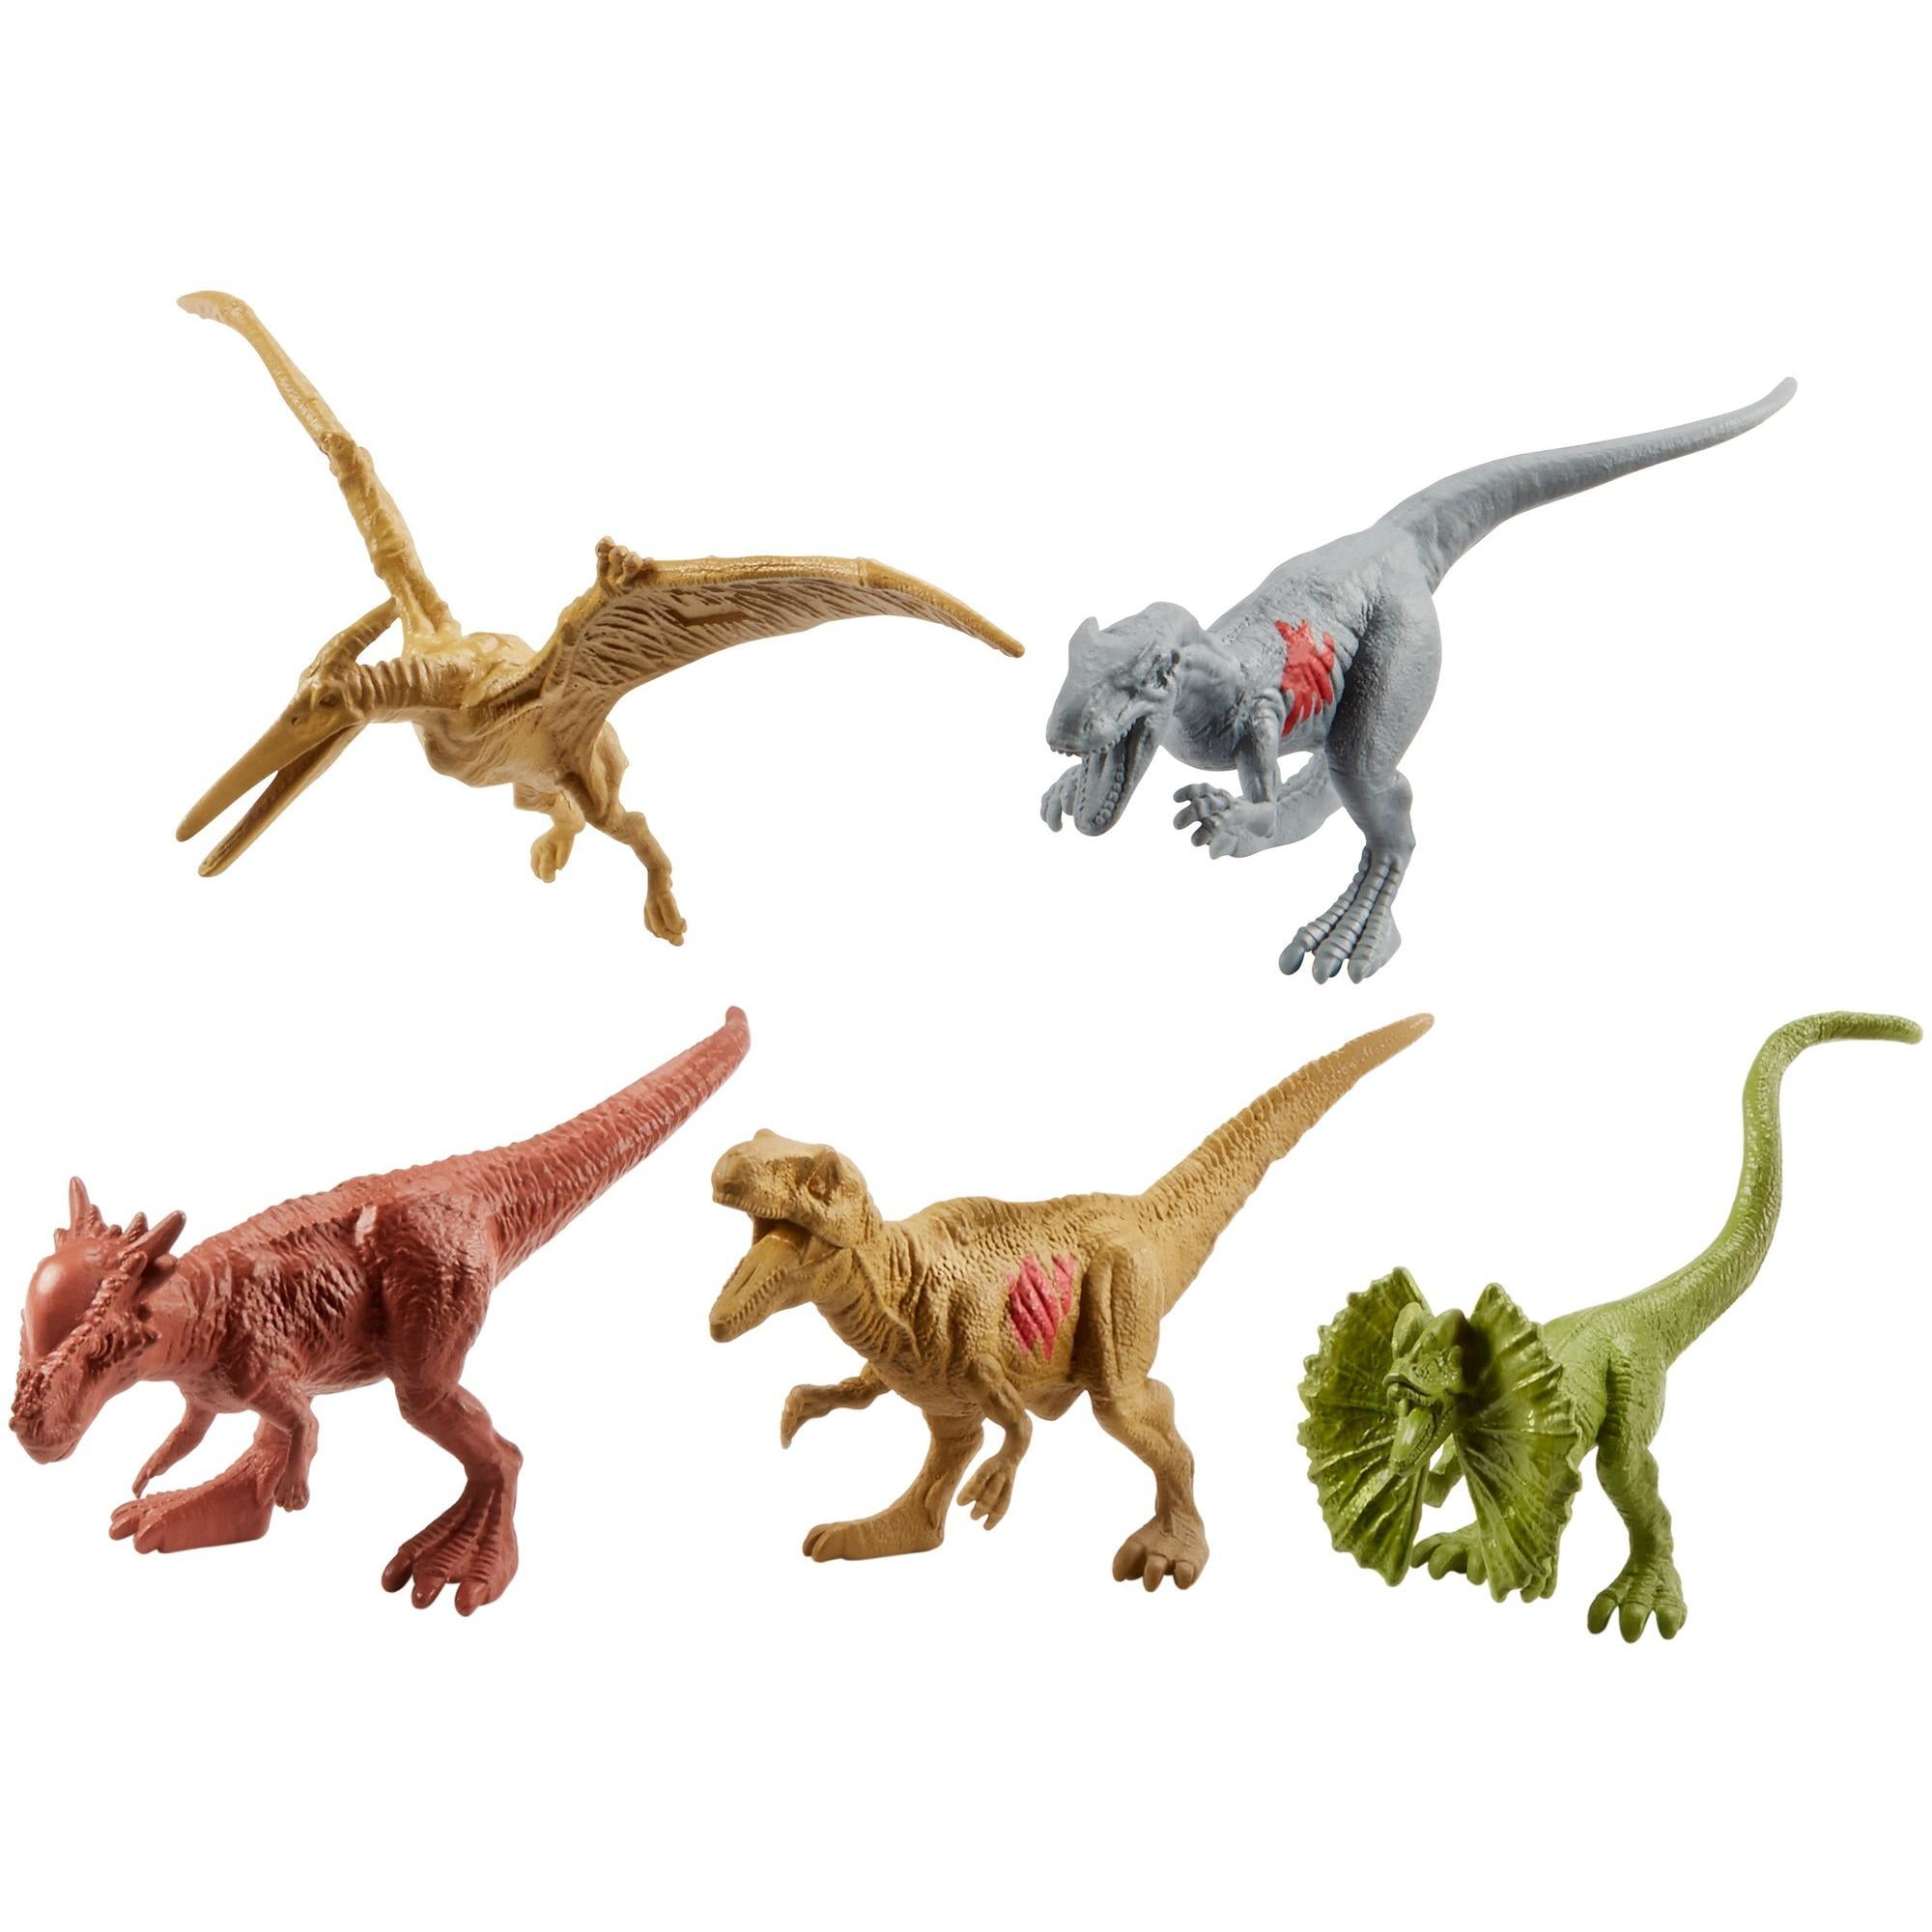 Мир динозавров игрушка. Набор Jurassic World 15 мини-динозавров. Динозавры игрушки парк Юрского периода 2. Mattel Jurassic World мини динозавров. Jurassic World Mini Dino 15 Dinosaurs.